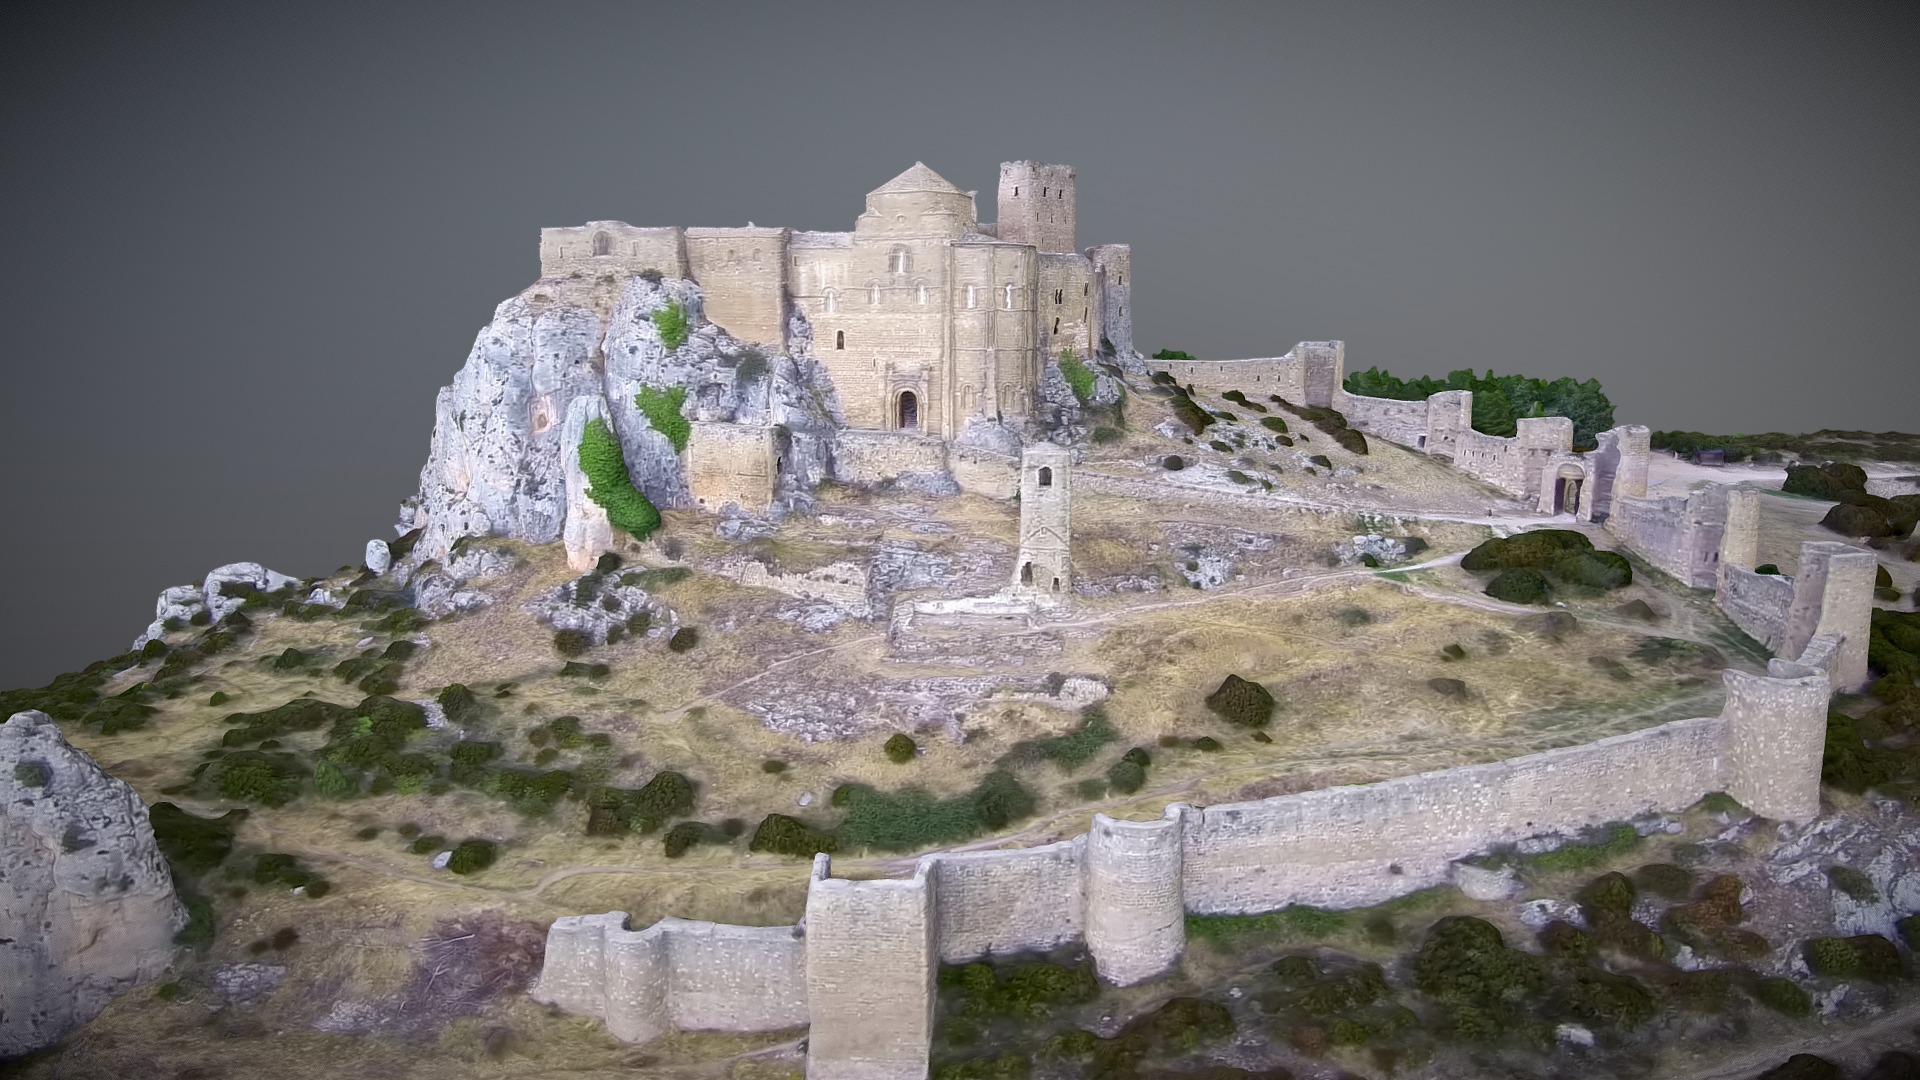 3D model Loarre castle photogrammetry scan remake - This is a 3D model of the Loarre castle photogrammetry scan remake. The 3D model is about a stone building on a rocky hill.